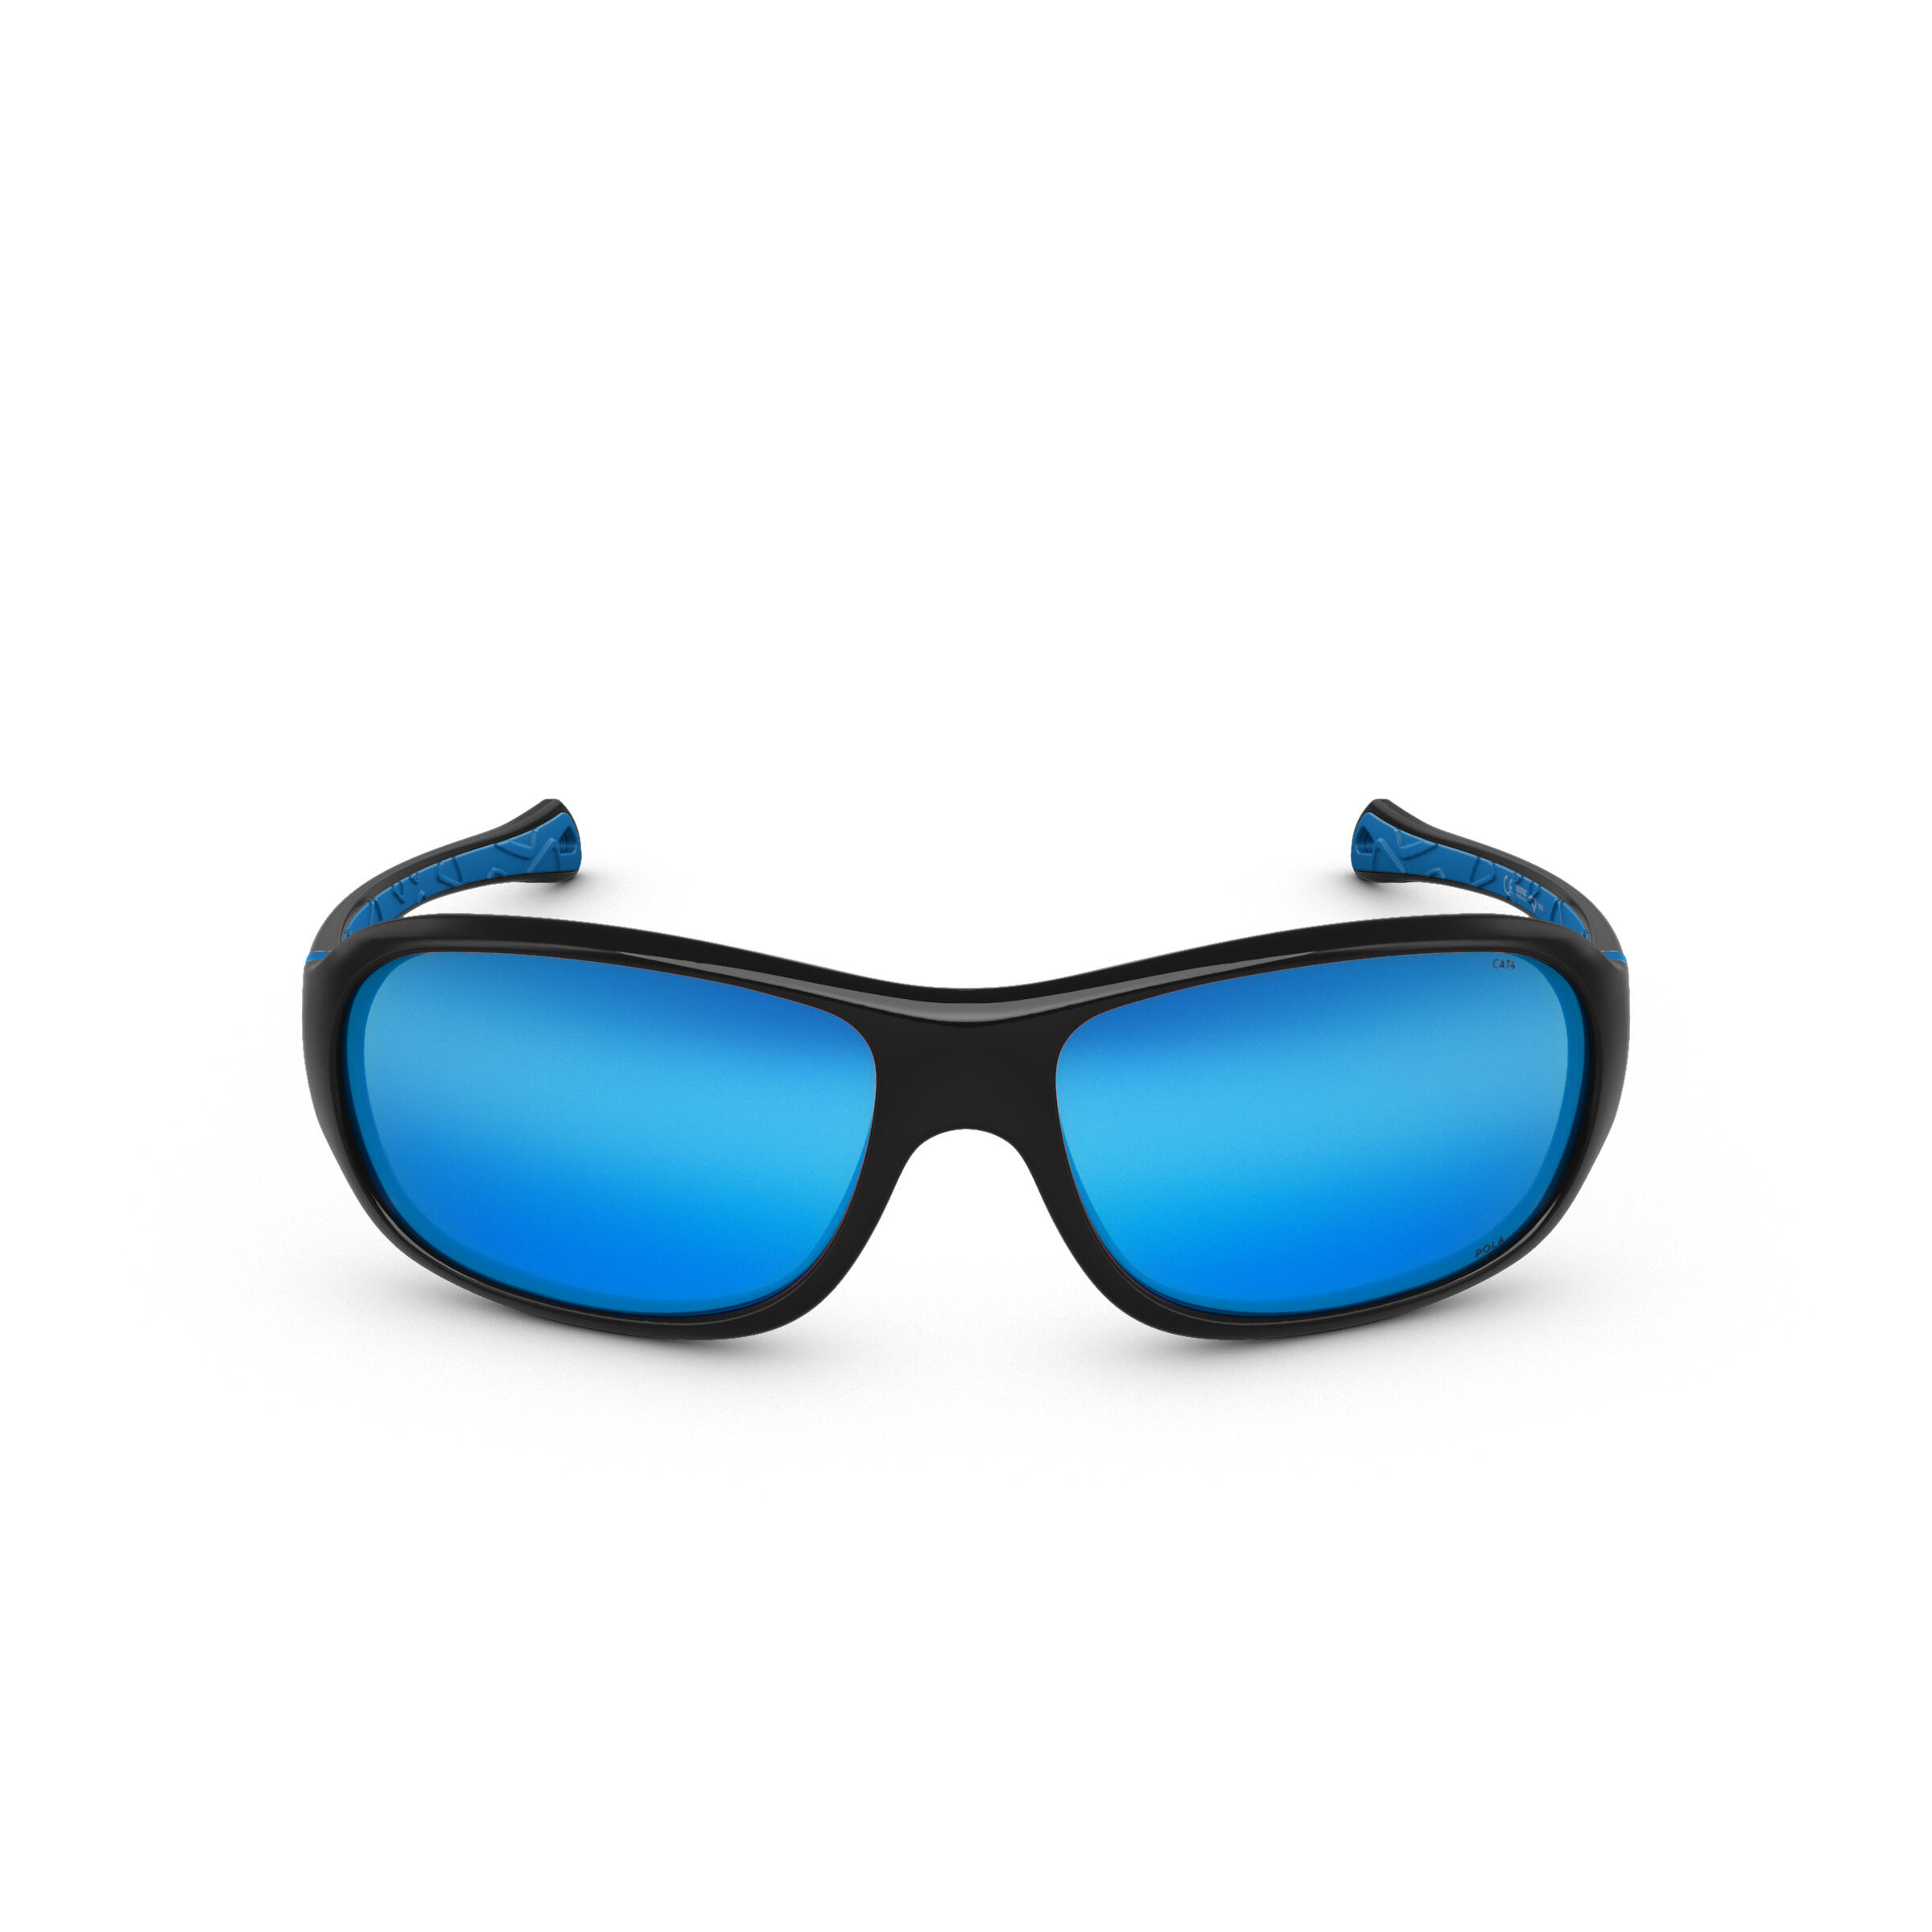 MH500 category 4 hiking sunglasses - Kids - Black, Blue - Quechua ...